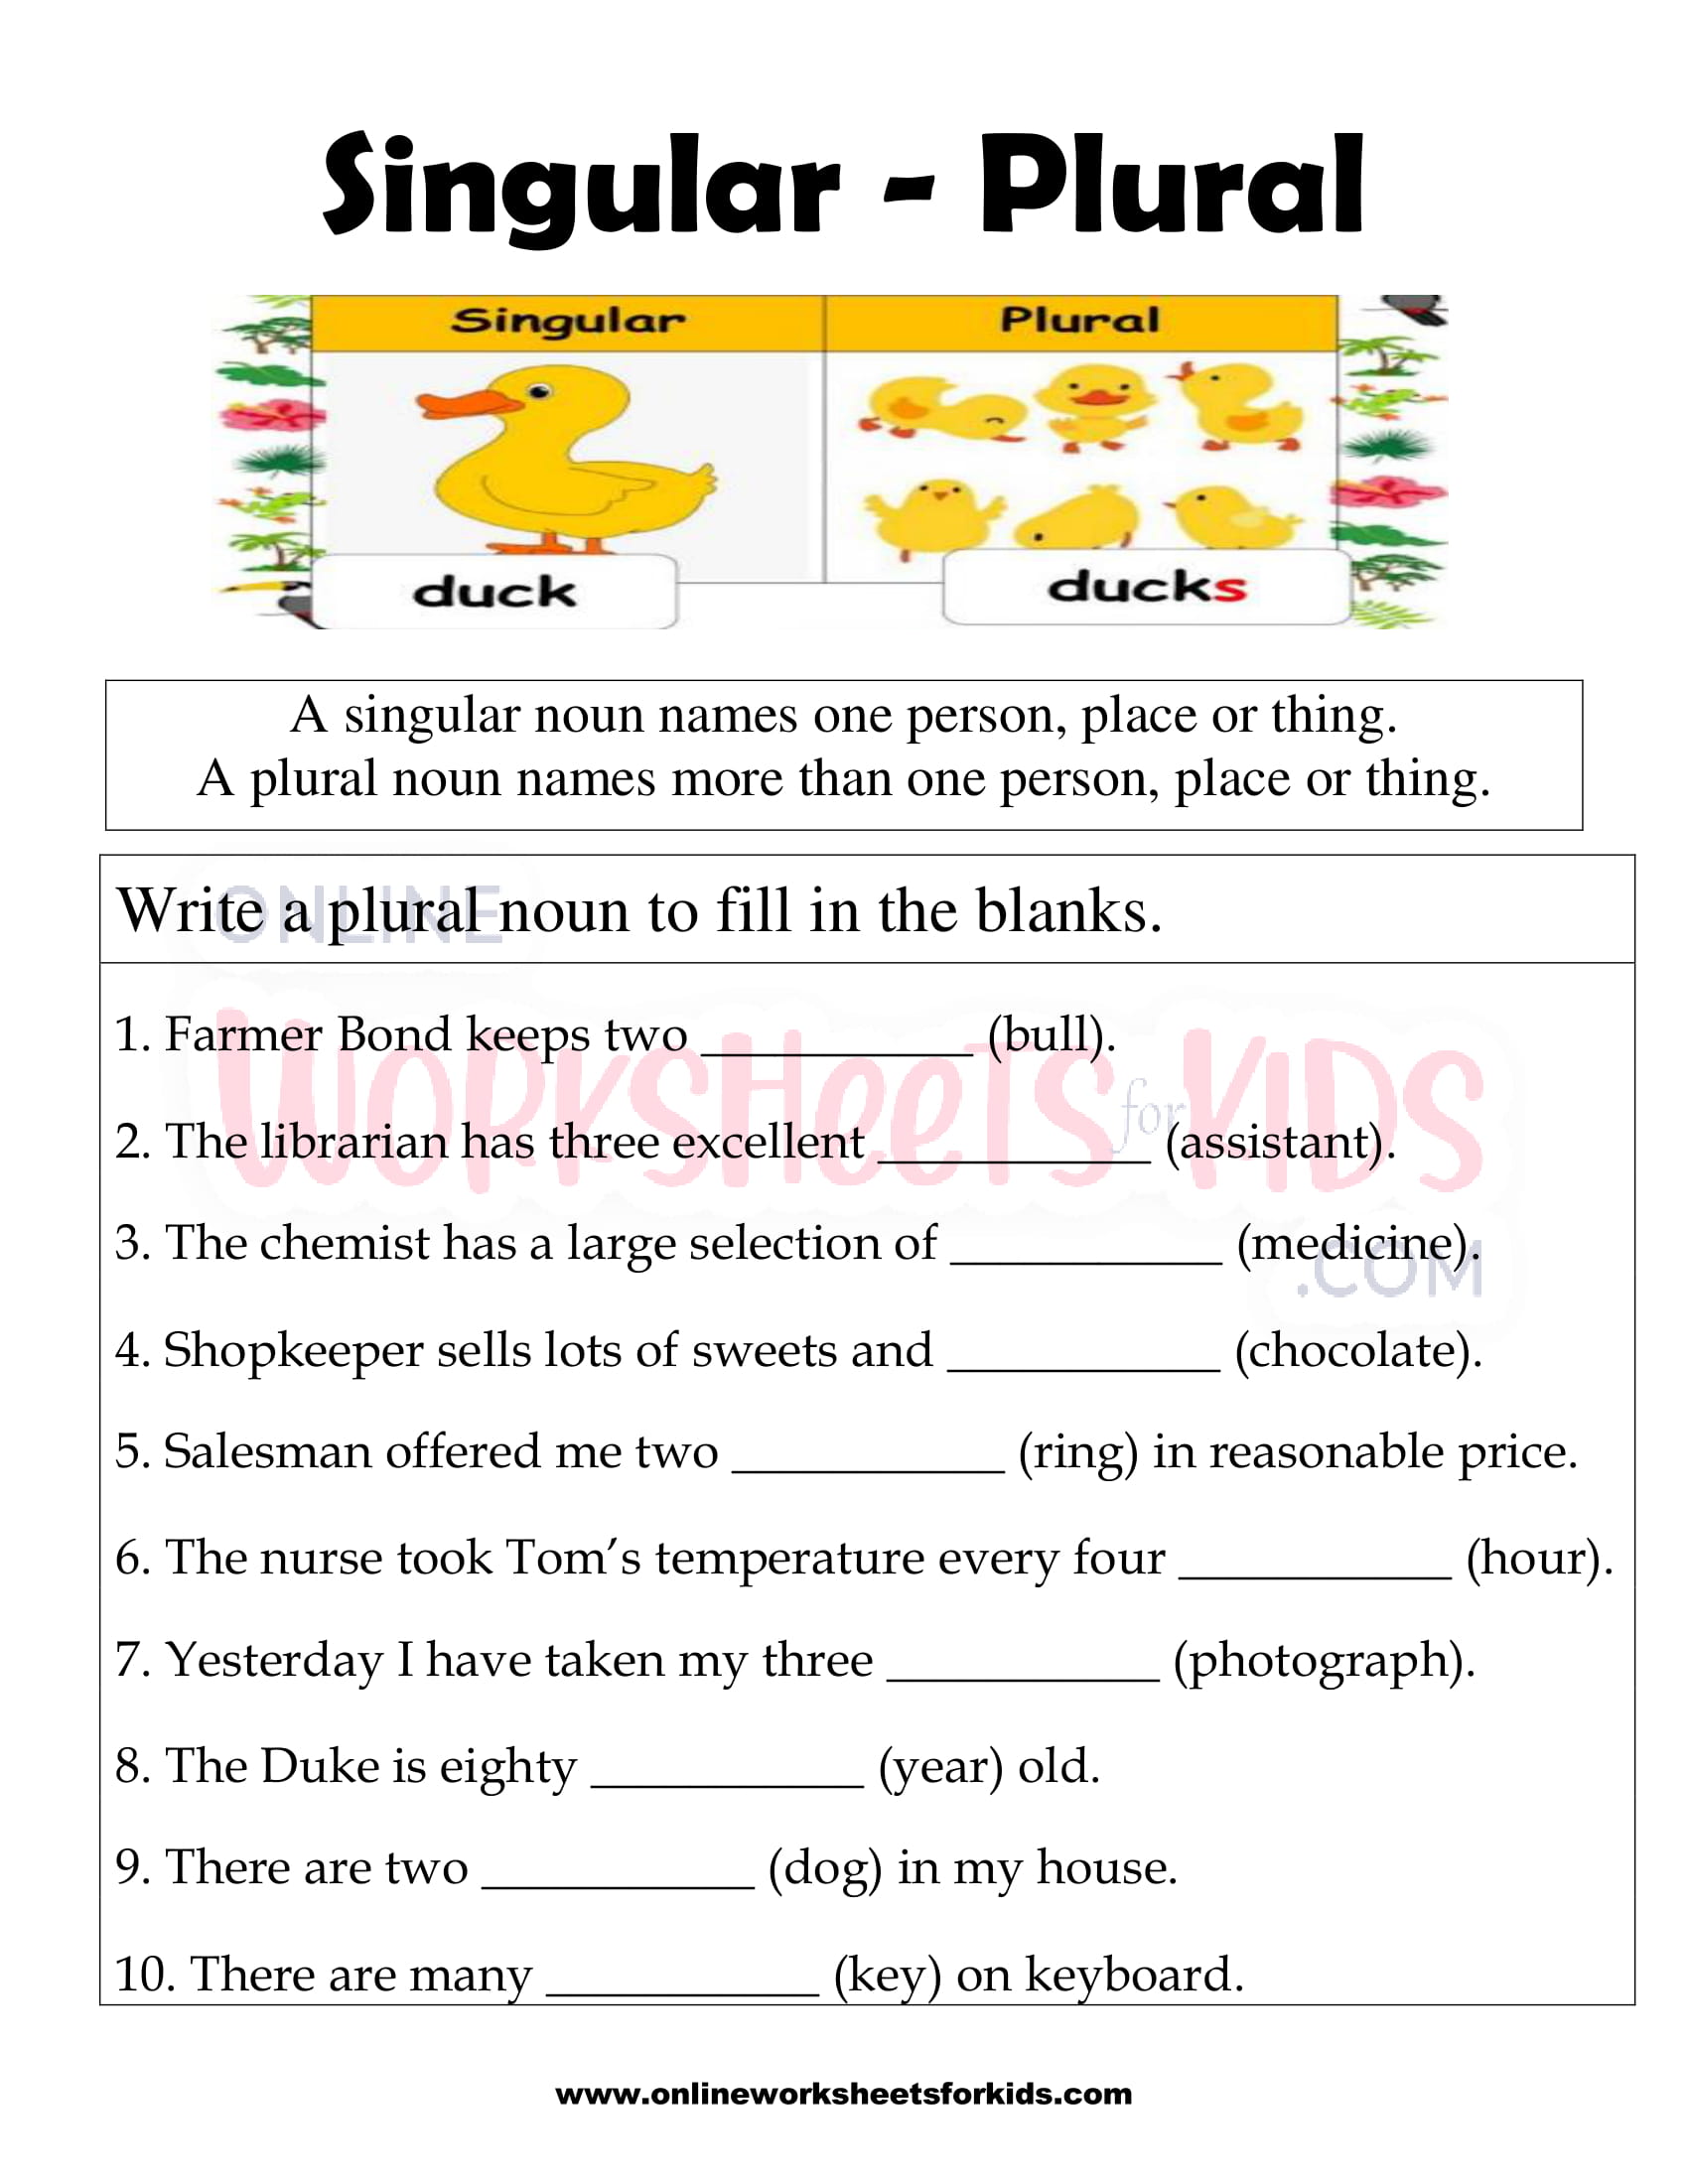 singular-and-plural-nouns-fb-worksheet-7